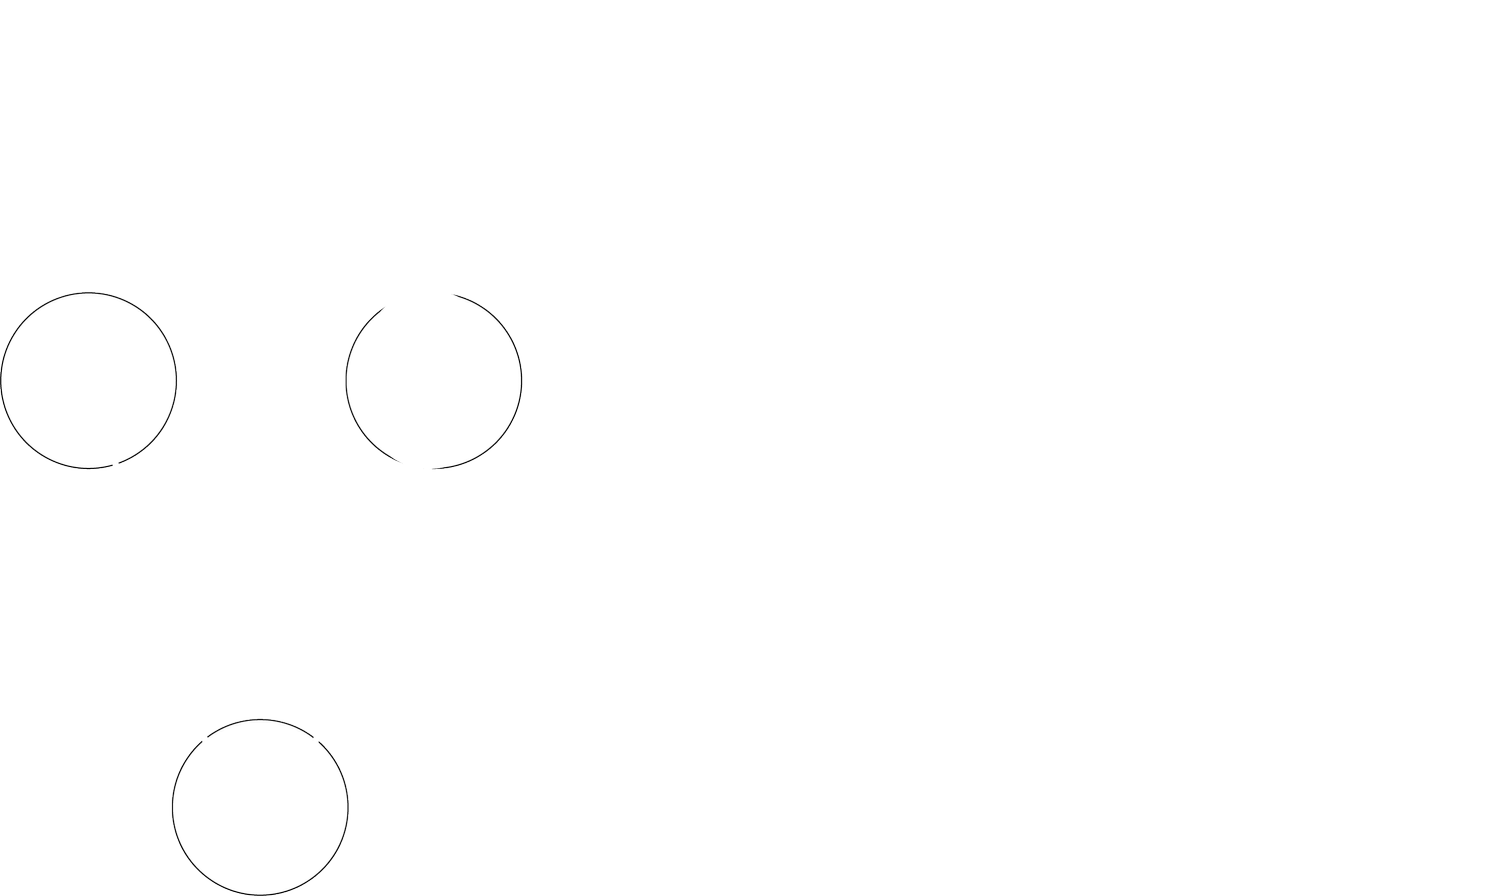 SalesSourcers